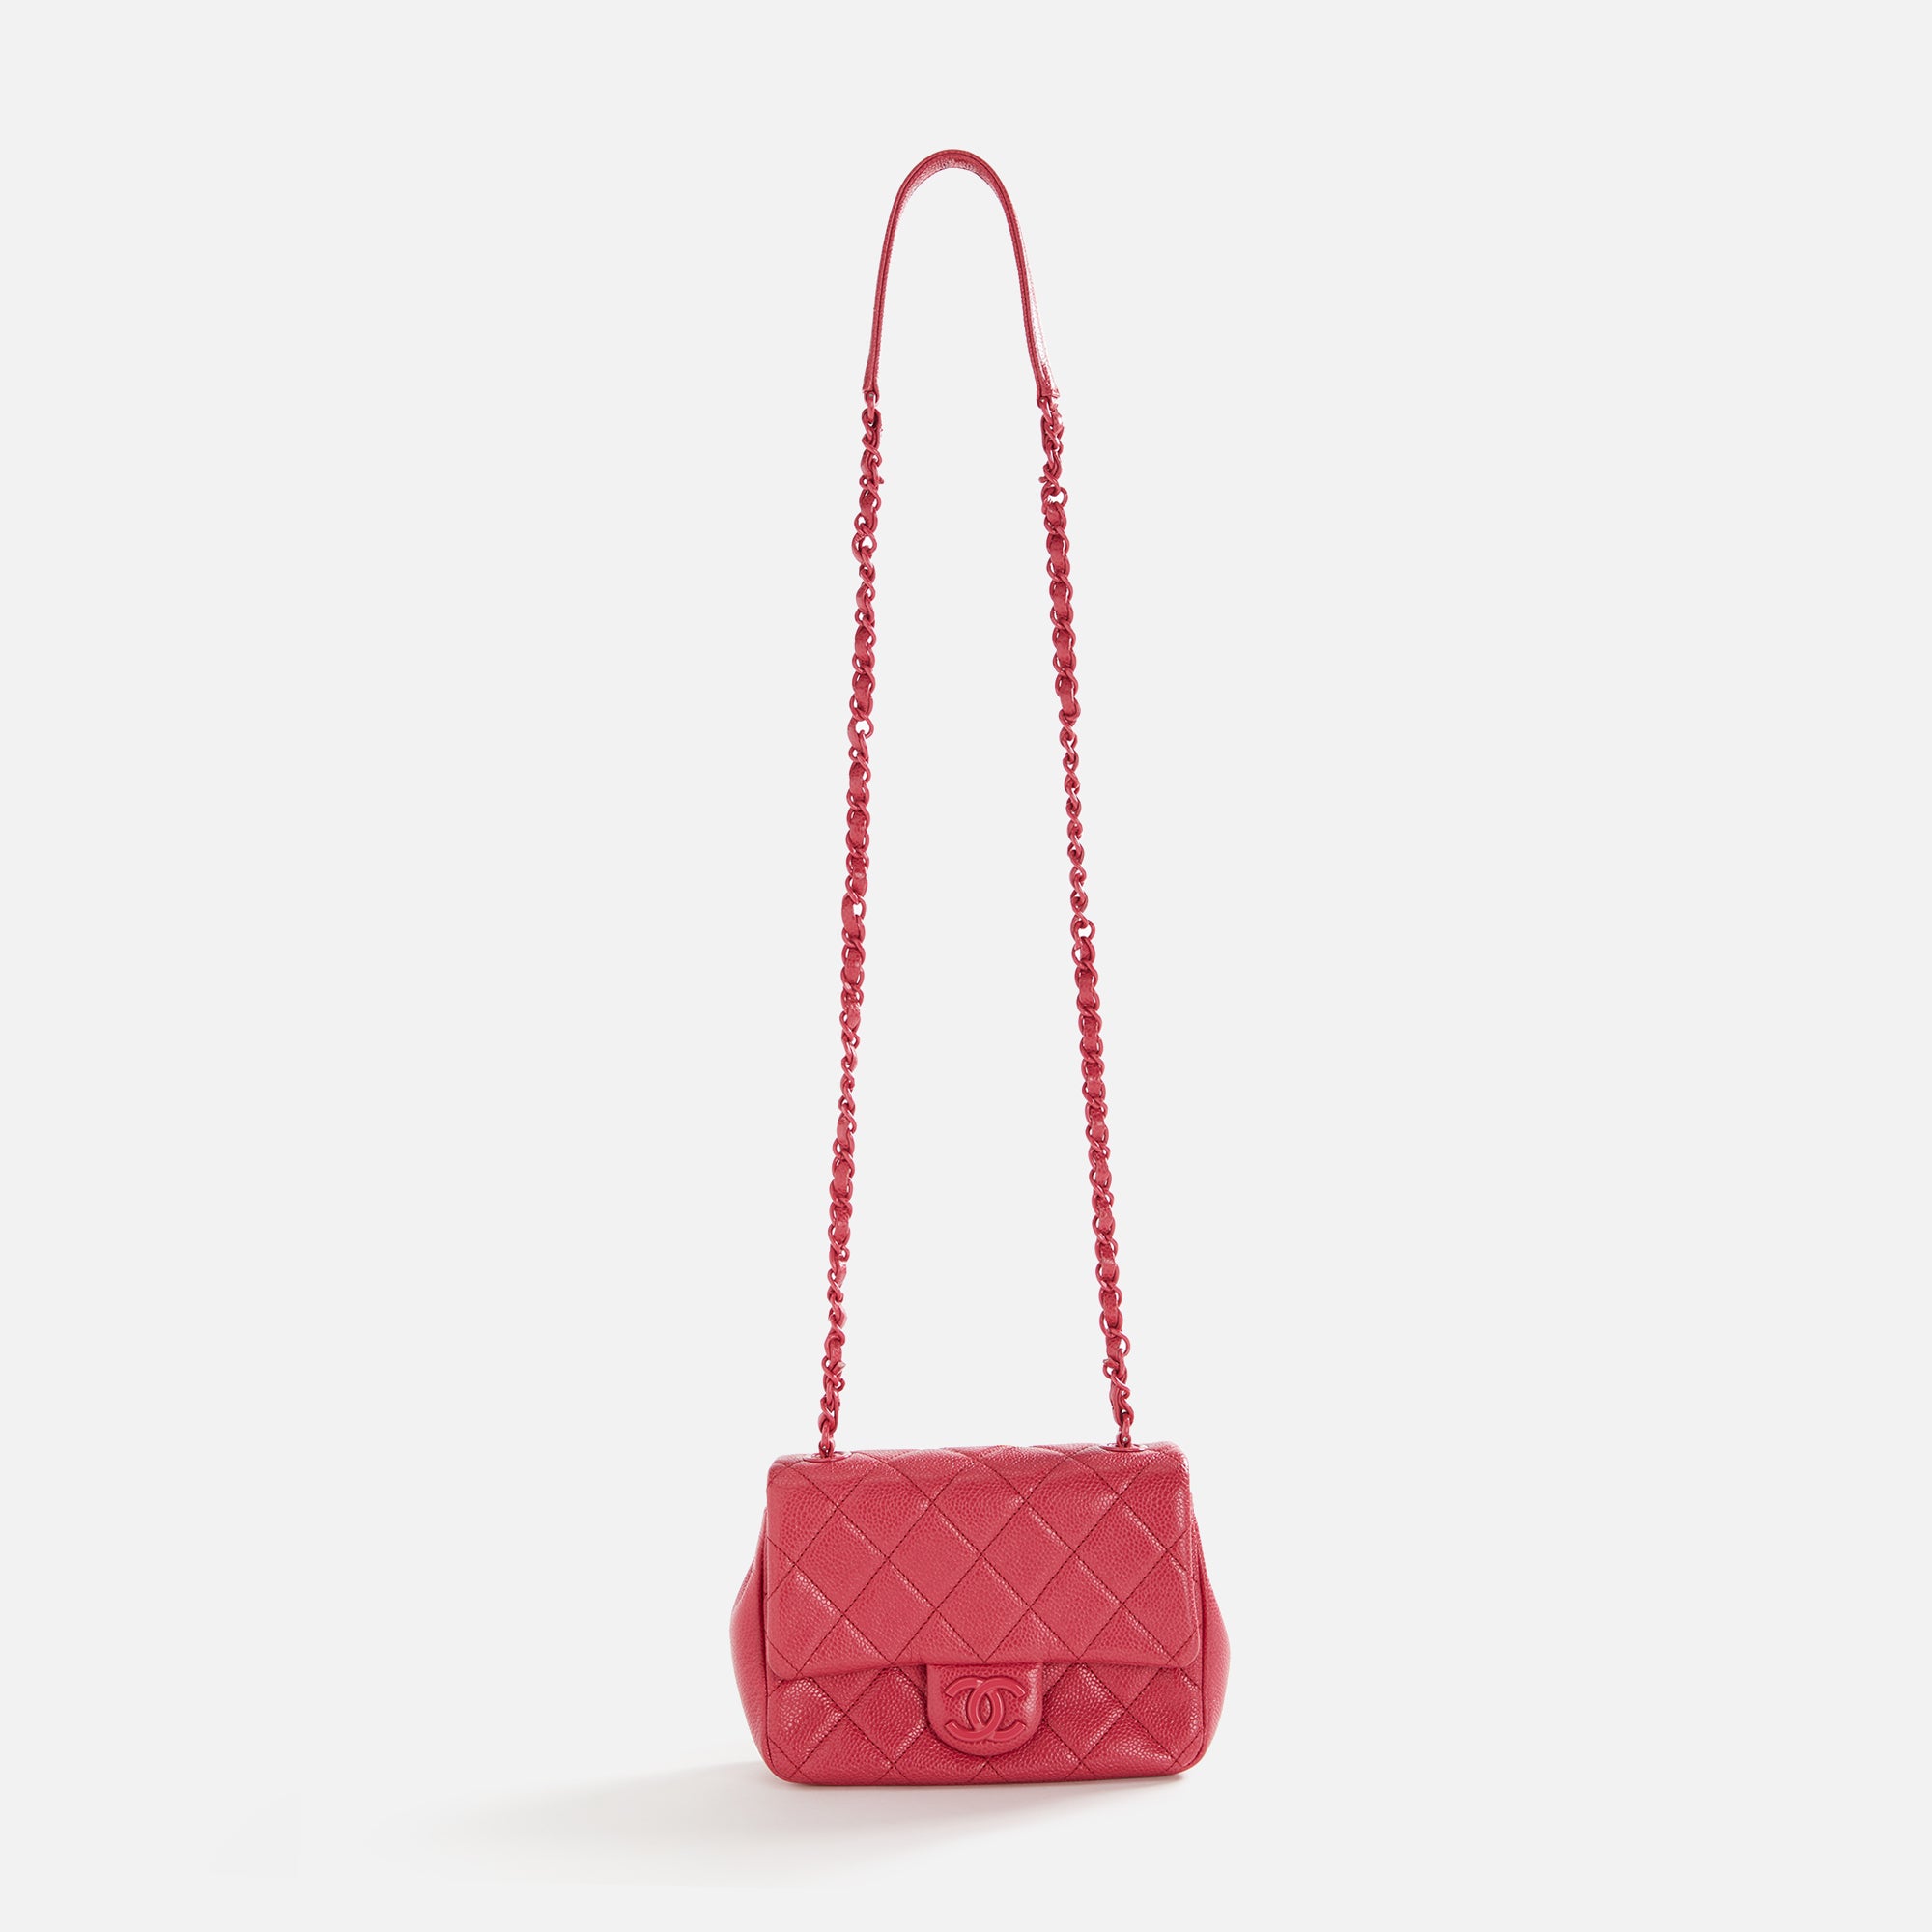 Chanel Top Handle Mini Rectangular Flap Bag Black Grained Calfskin